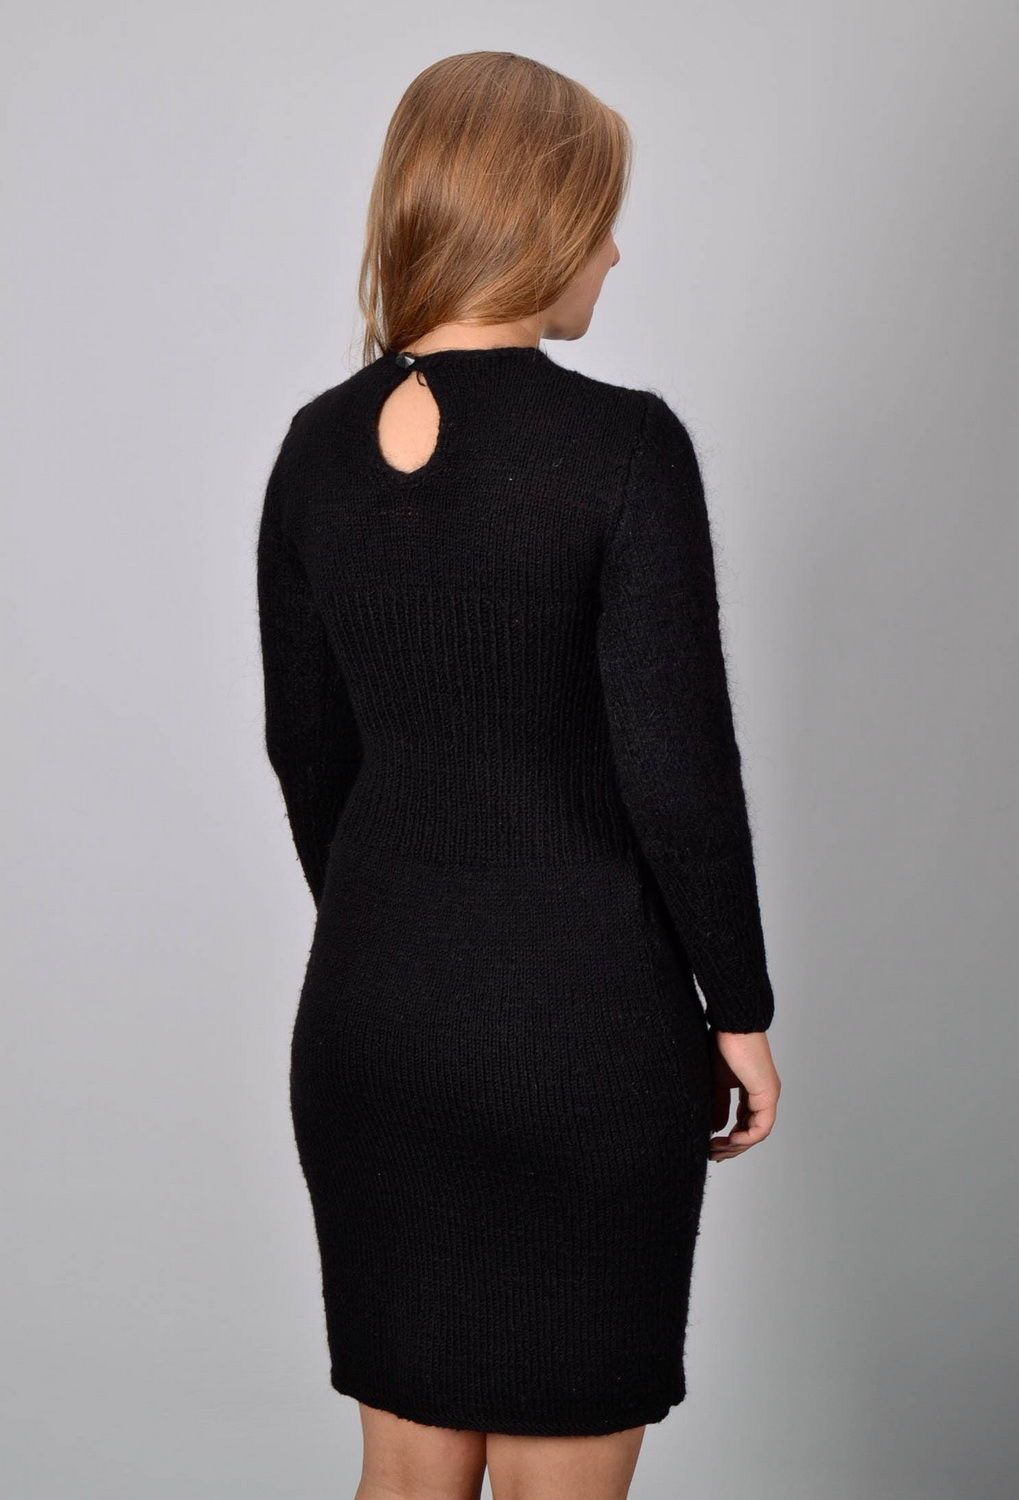 Black woolen dress photo 5